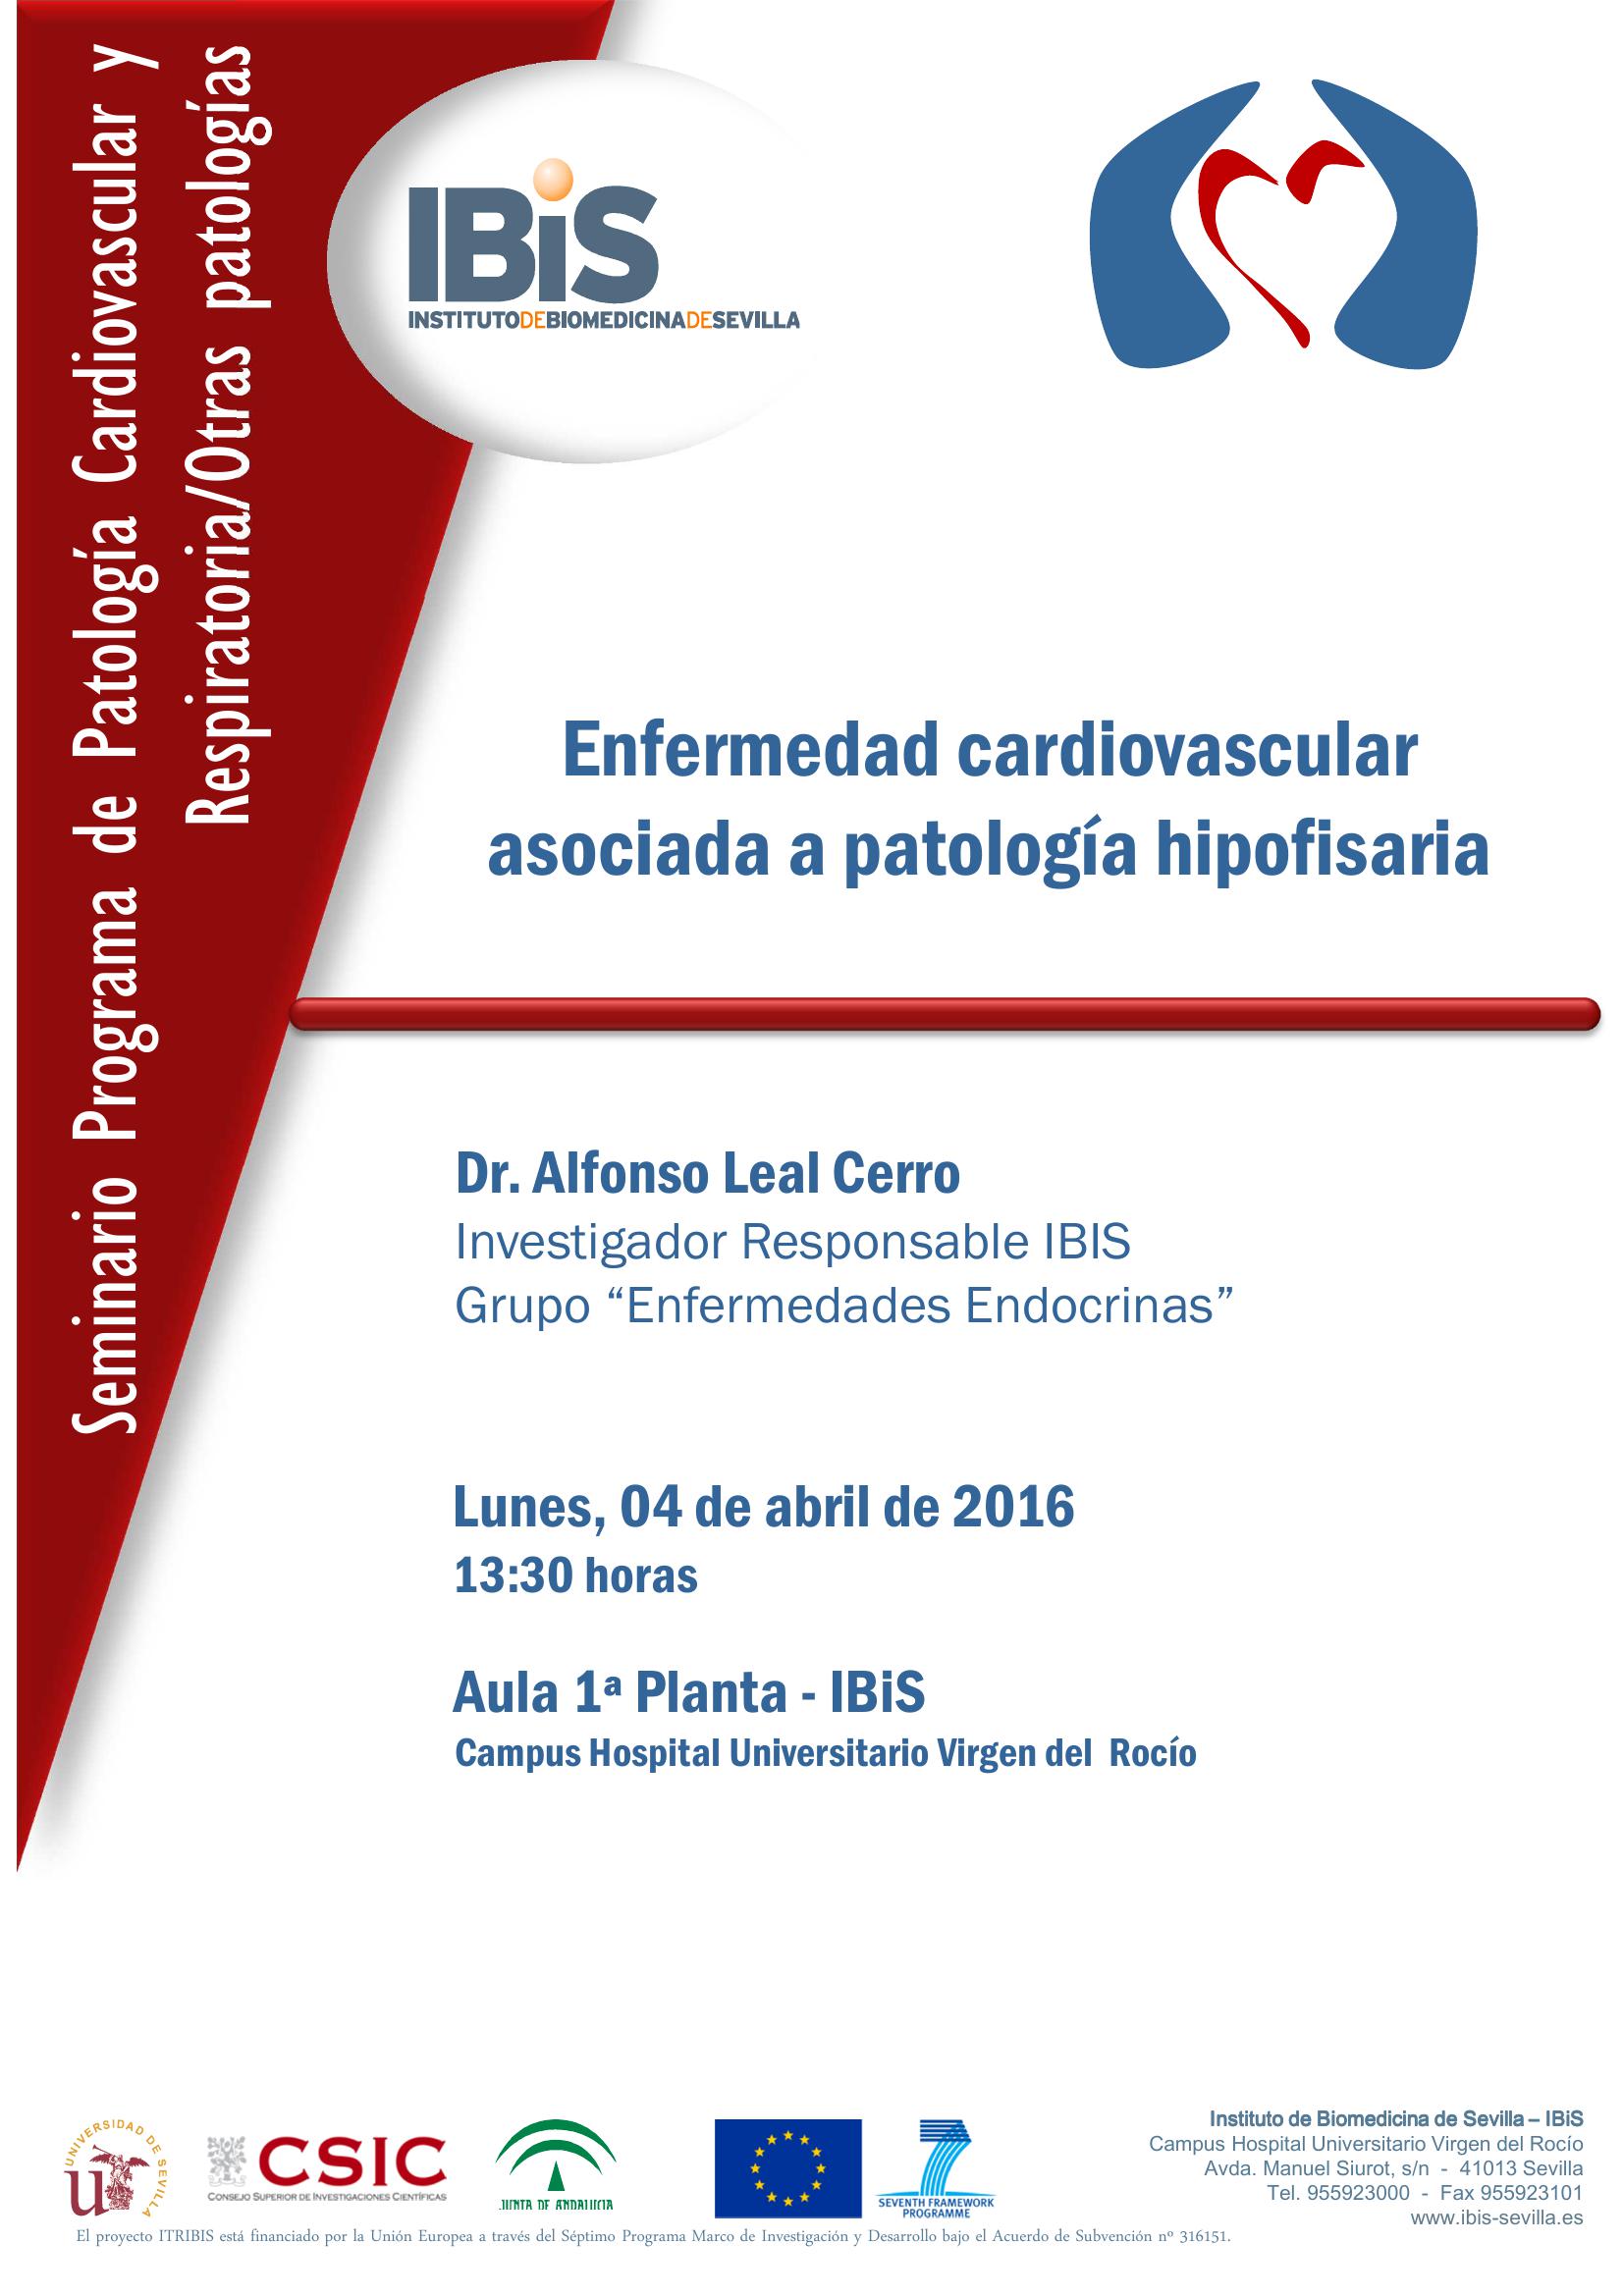 Poster: Enfermedad cardiovascular asociada a patología hipofisaria